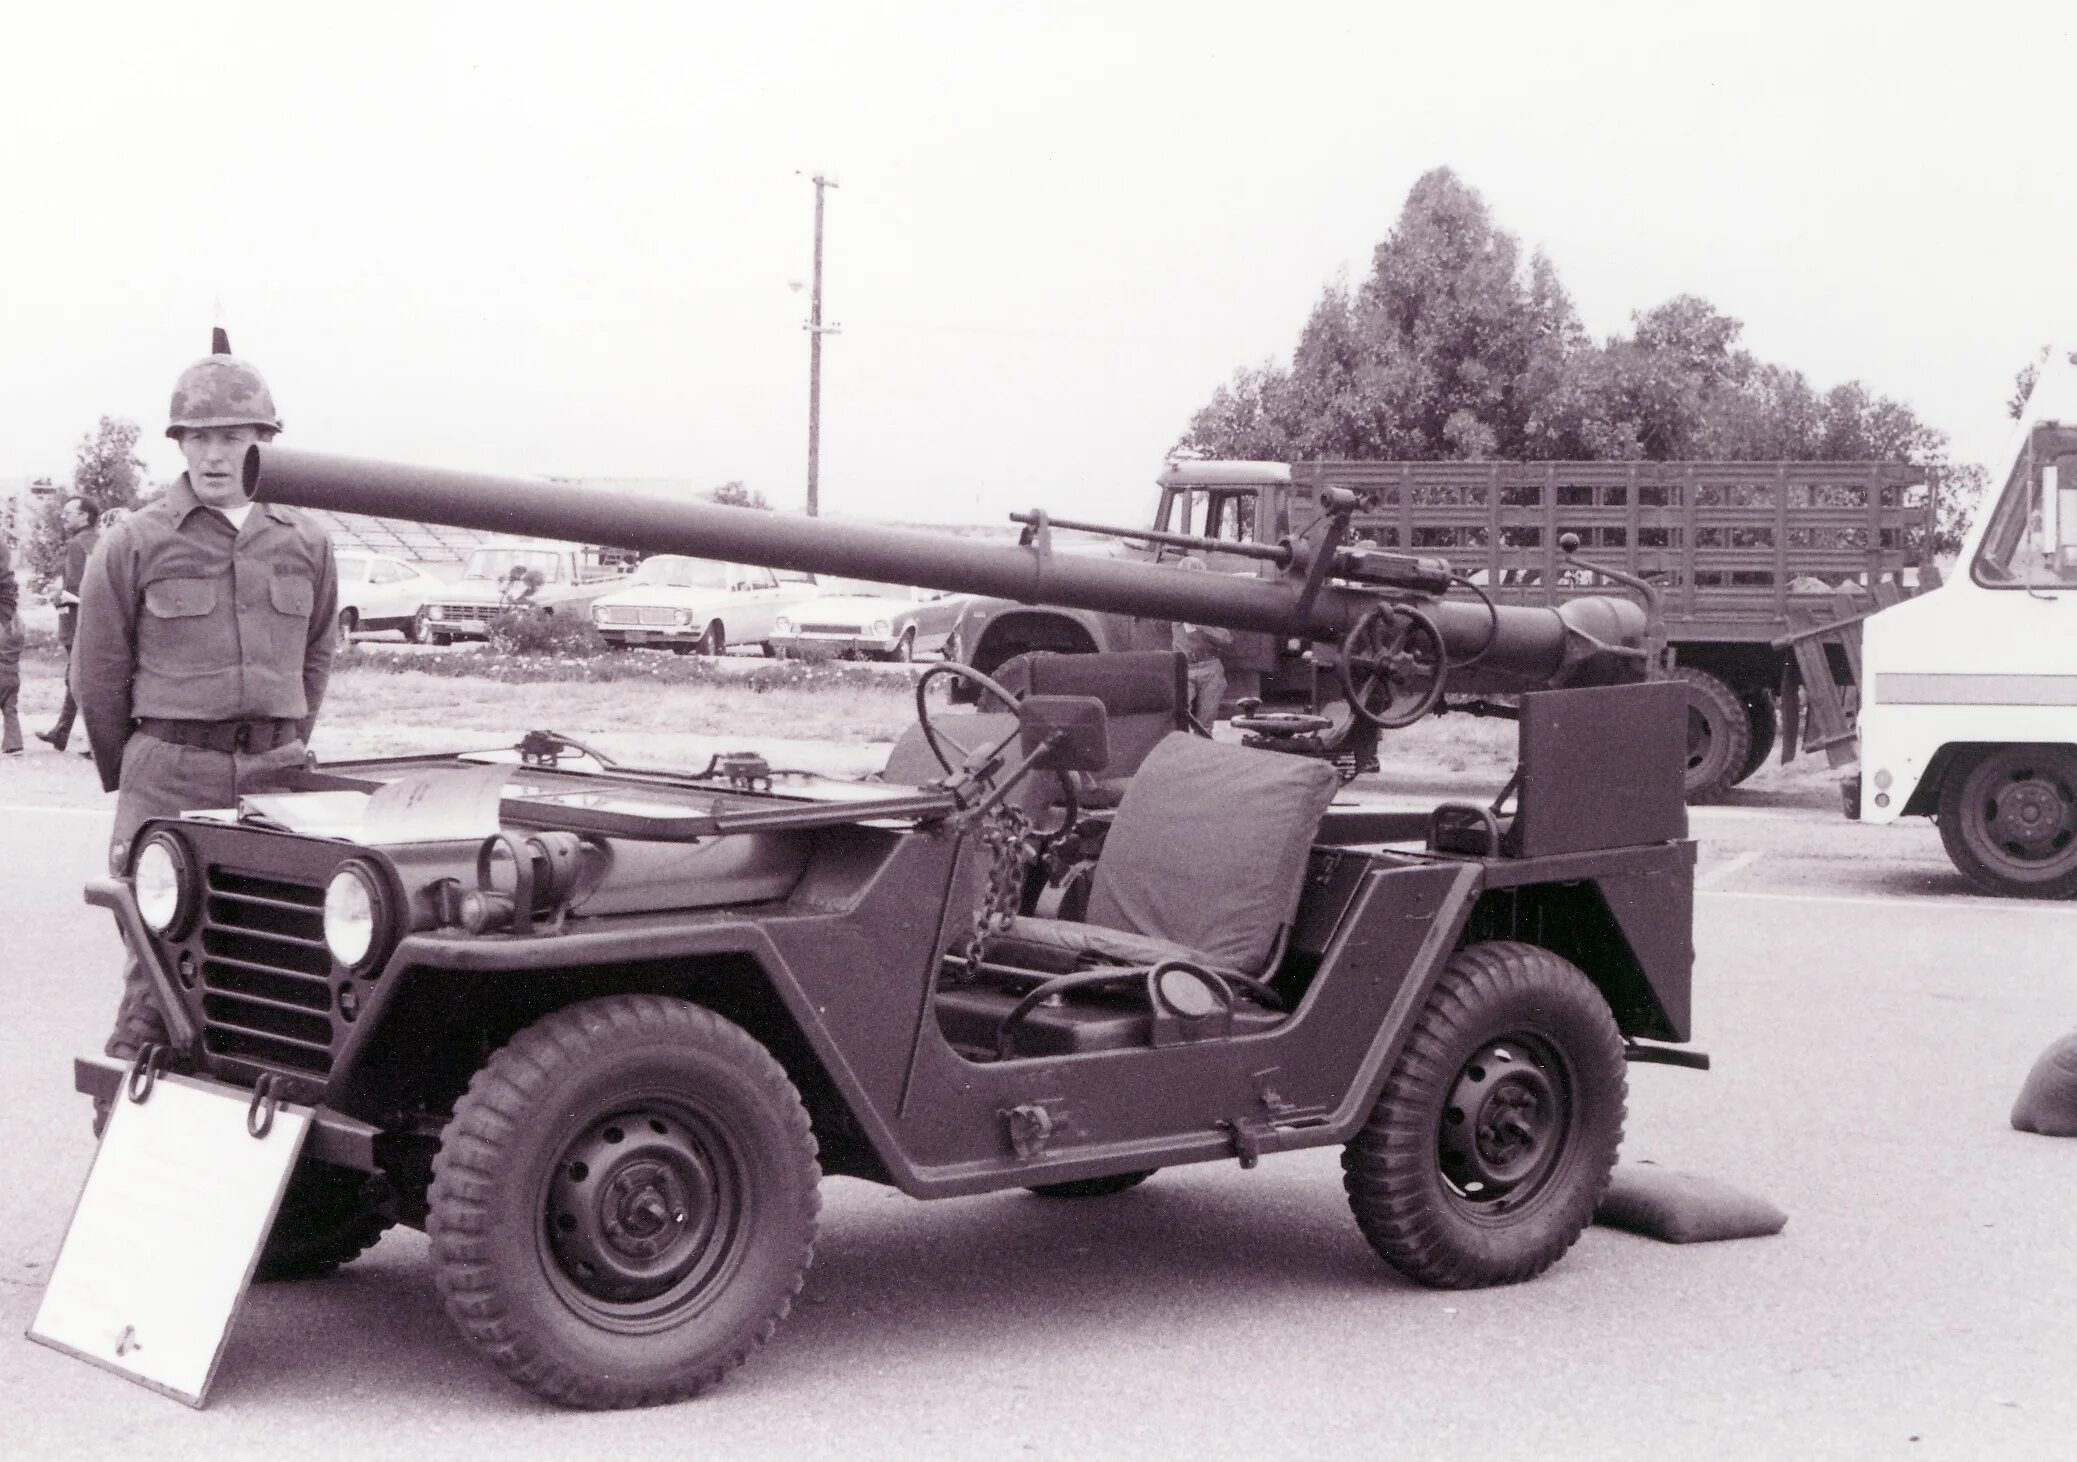 106 мм в м. M151a1 Utility Truck &m40 Recoilless Rifle. M151a1. 106mm m40 Recoilless Gun. Ford m151a1 Tow.